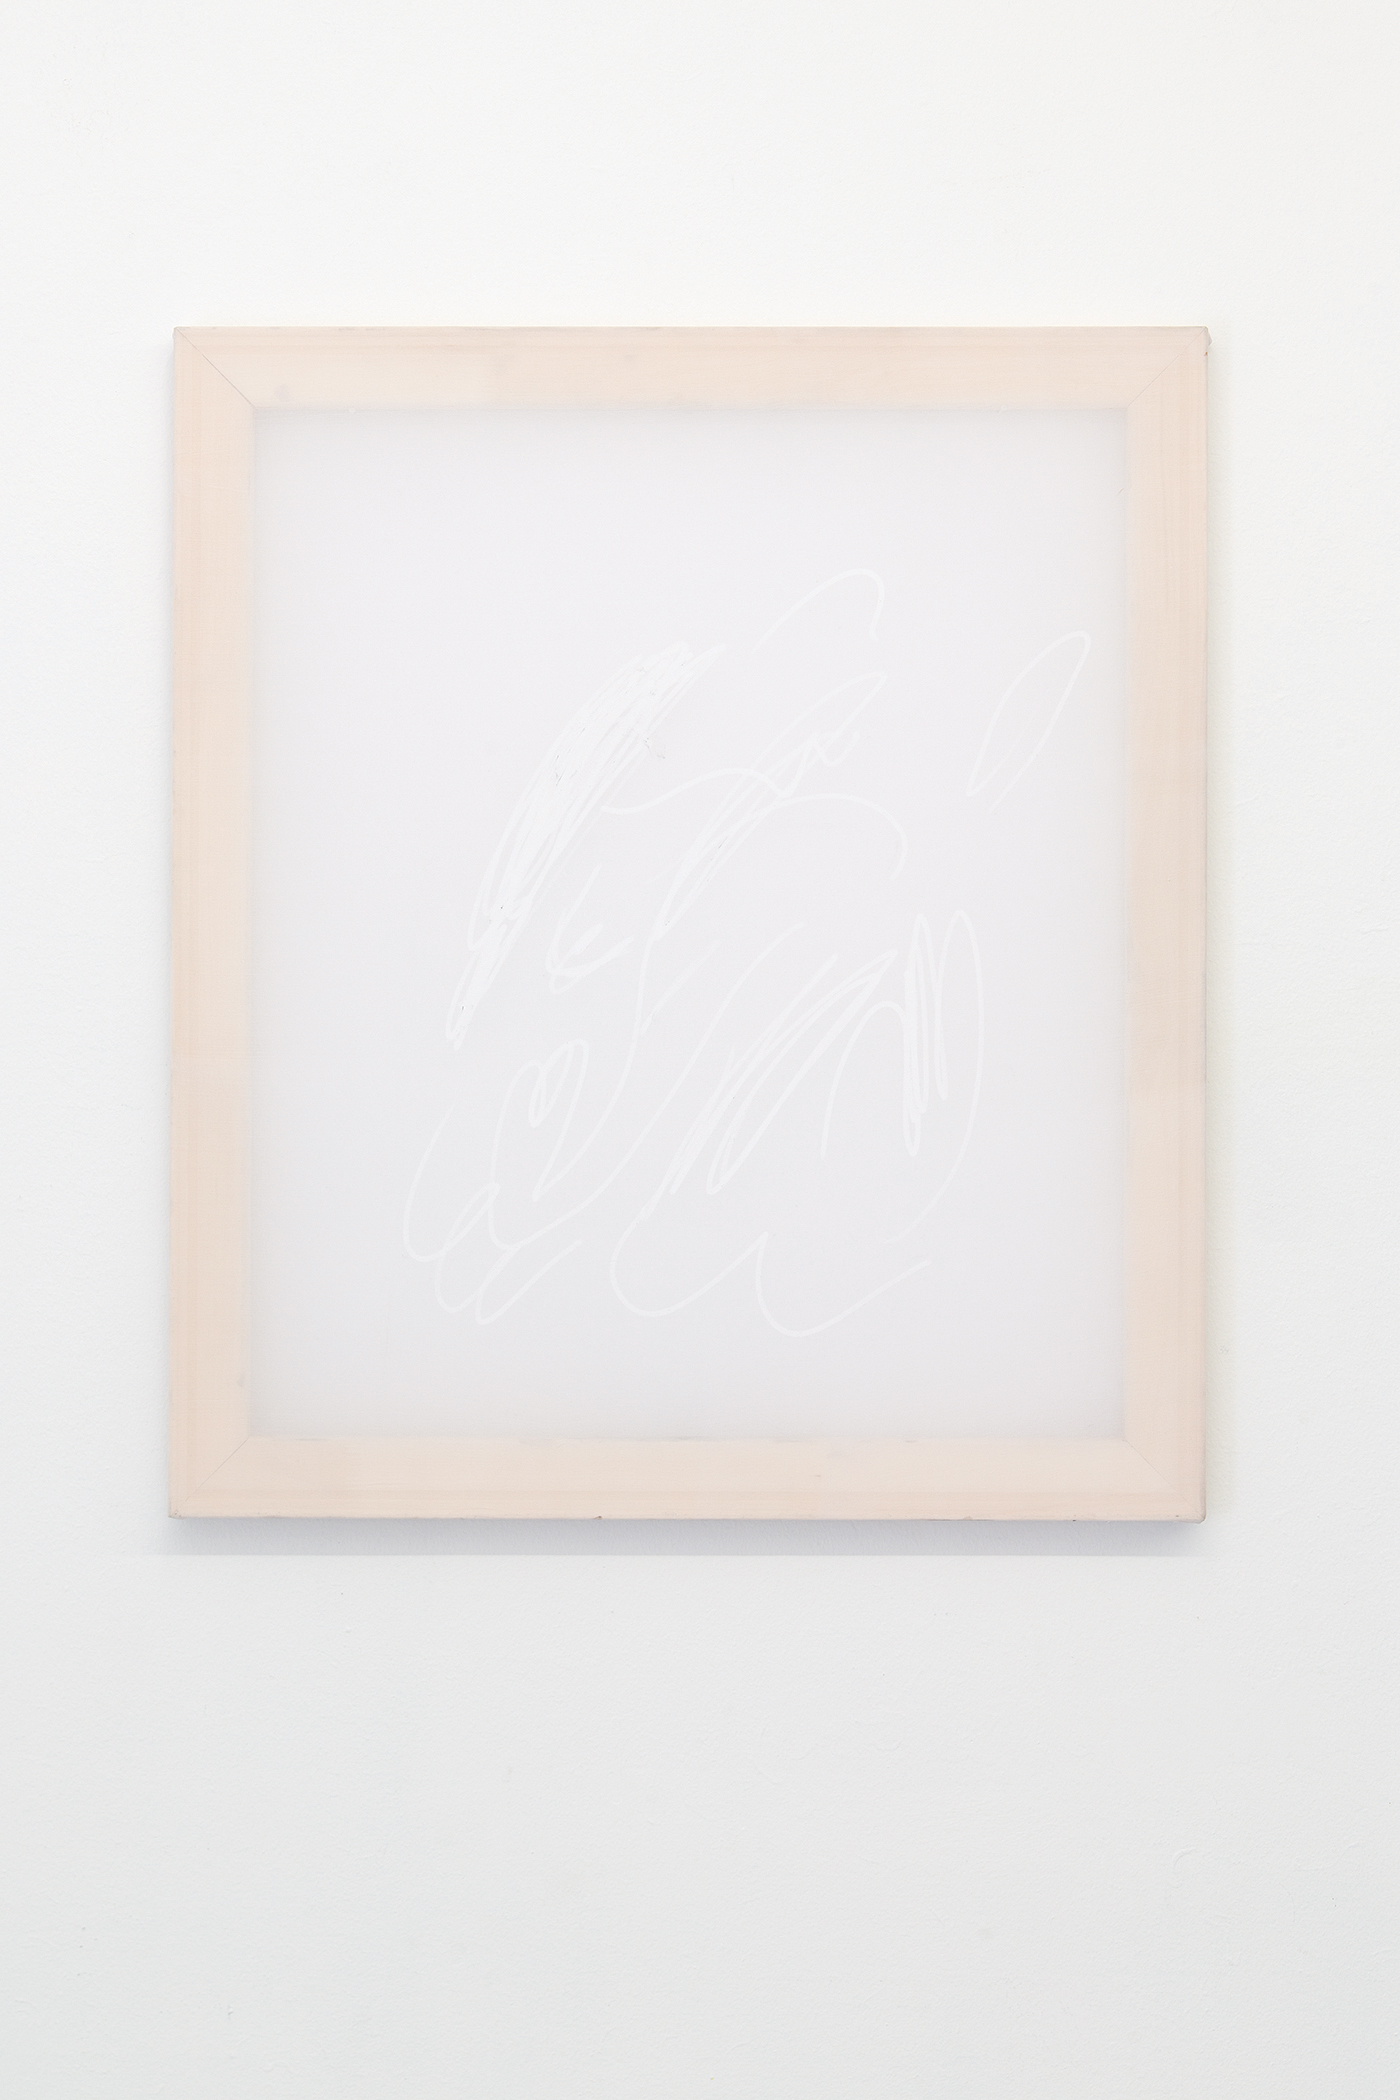  Alina Vergnano,  Soft Memory,  2019, acrylic on polyester, 80 x 90 cm 